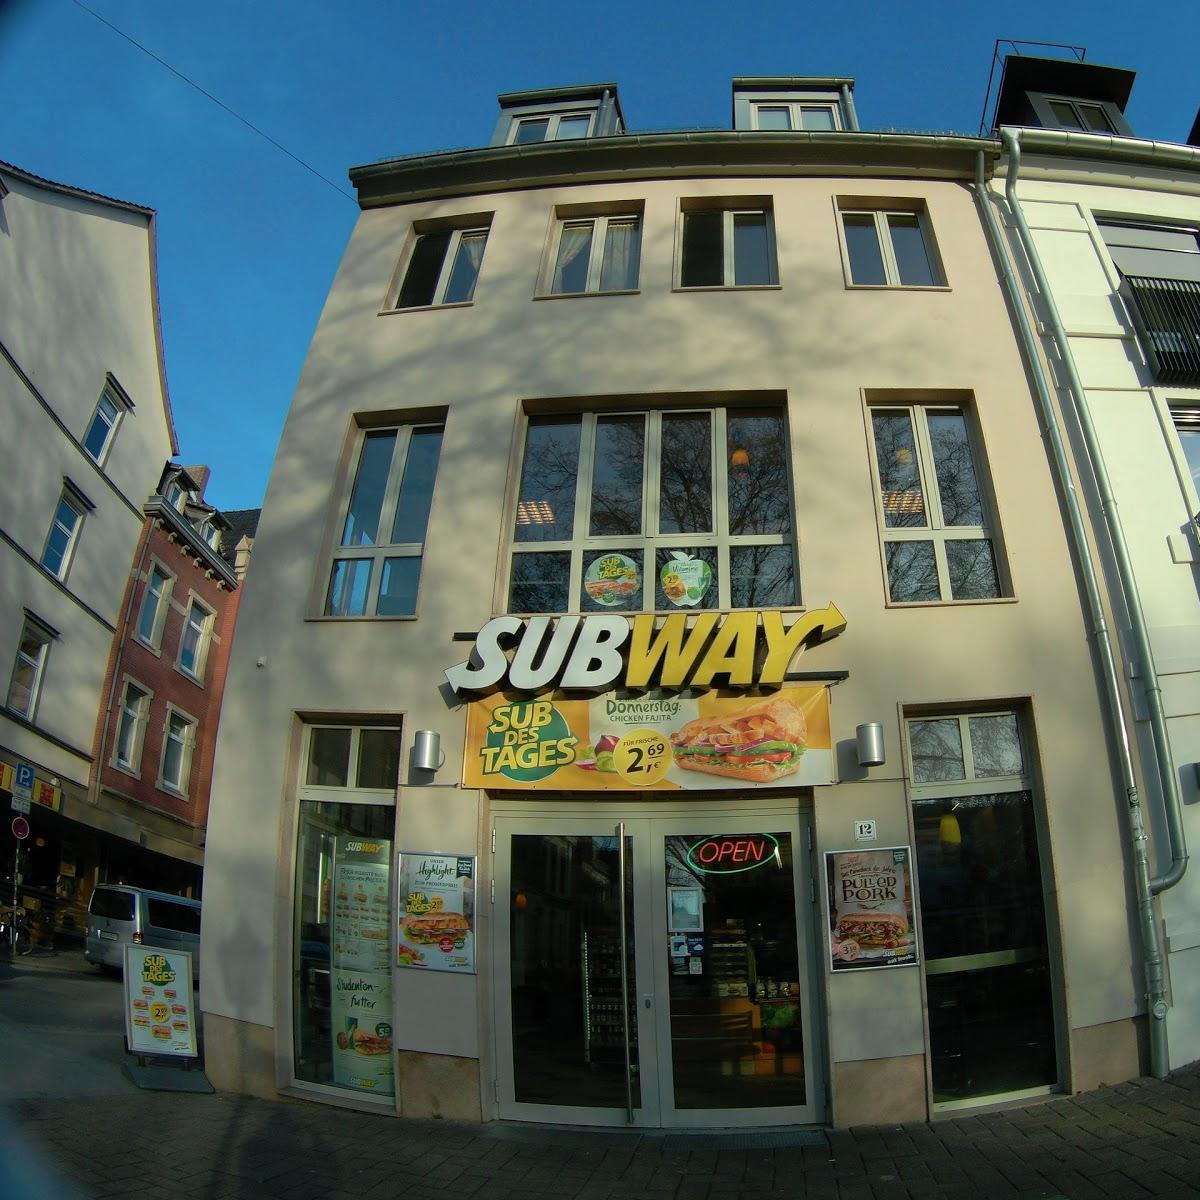 Restaurant "Subway" in Göttingen